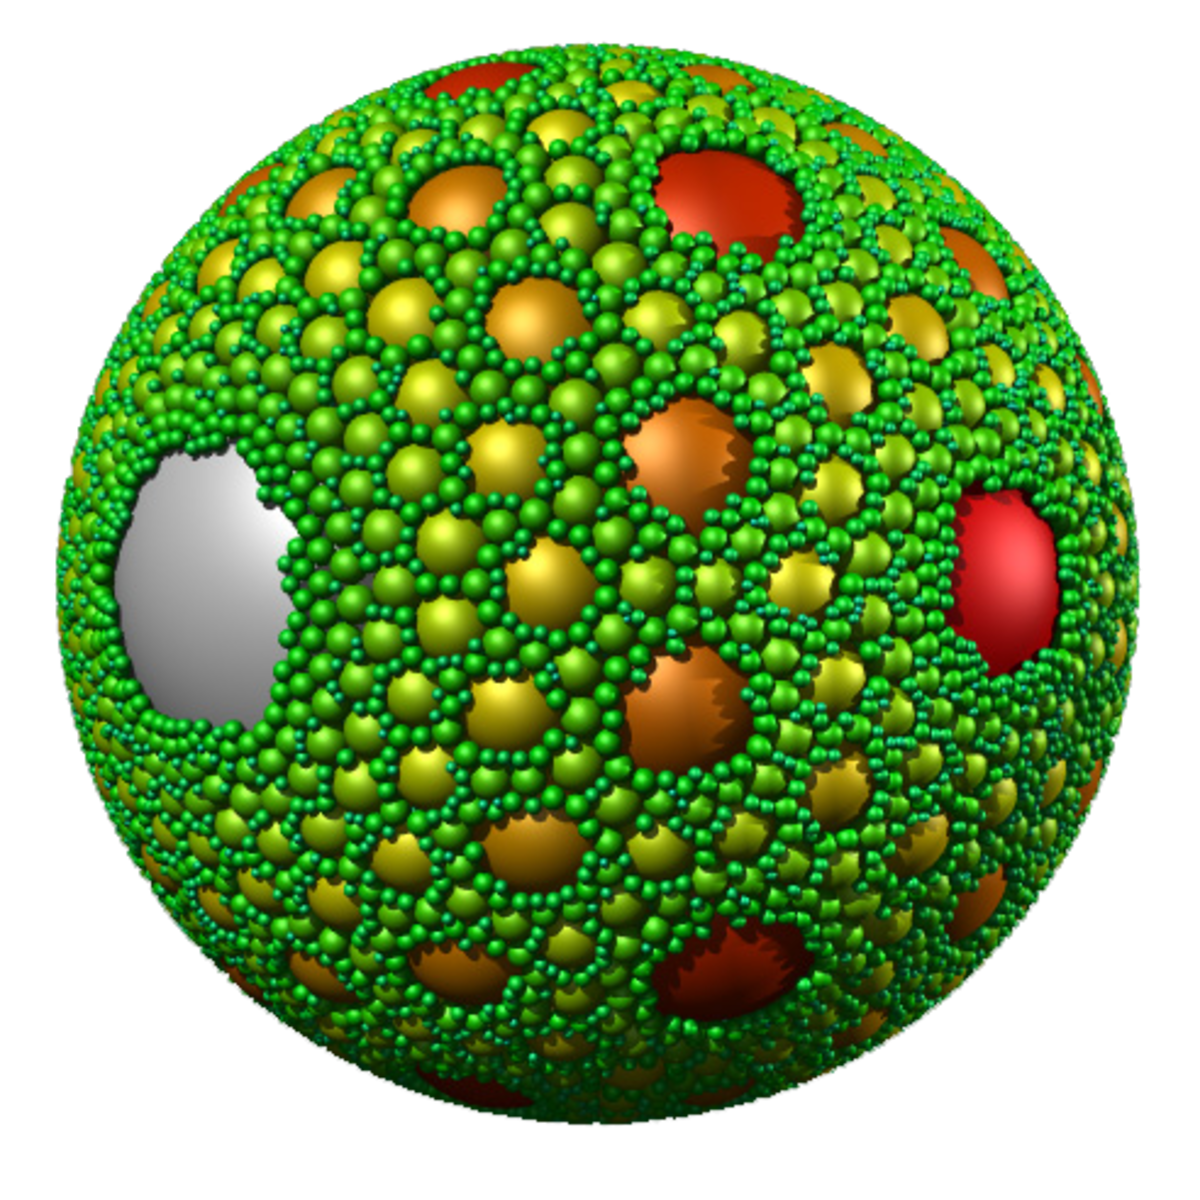 Apollonian spheres2.png